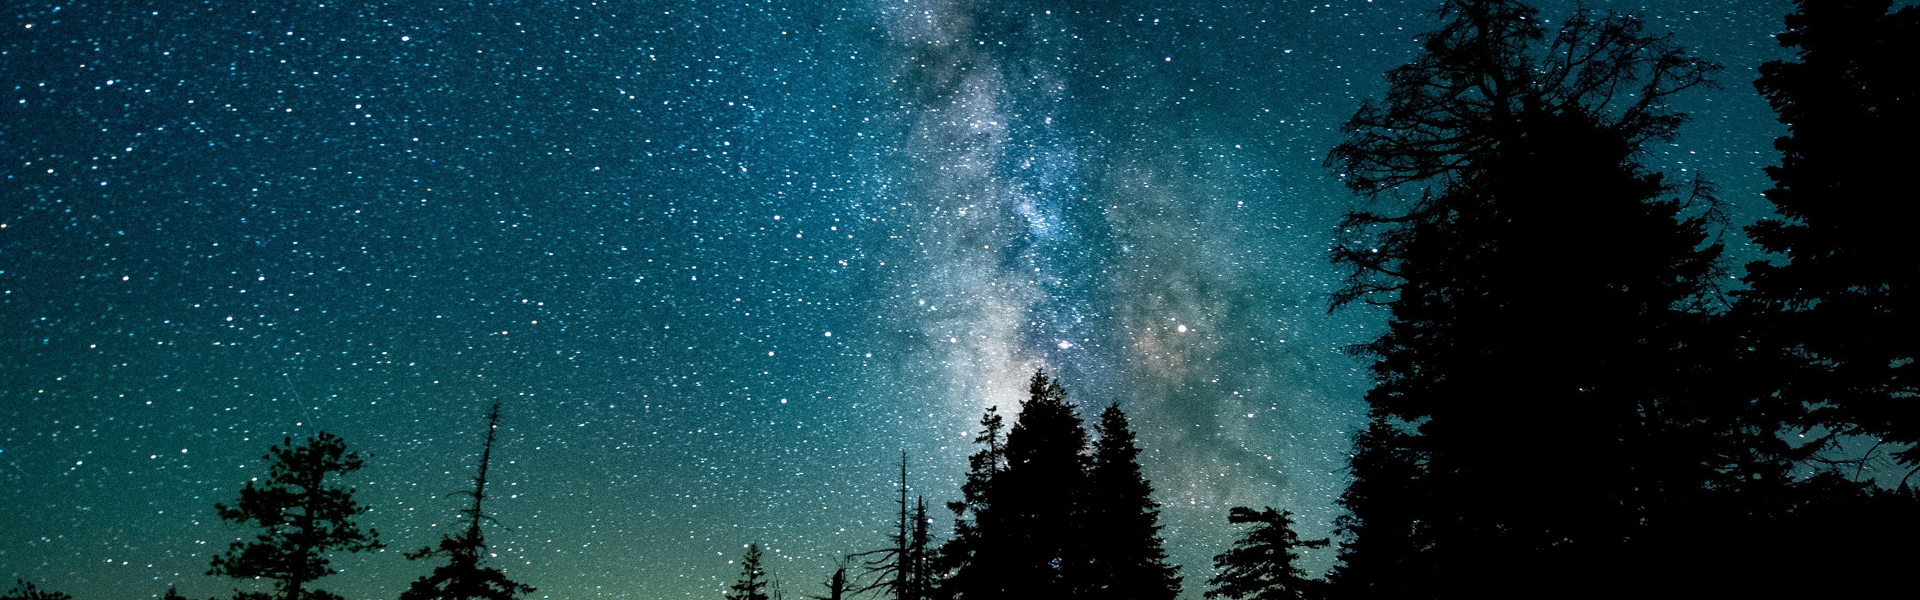 Astronomy Course: Explore the Night Sky